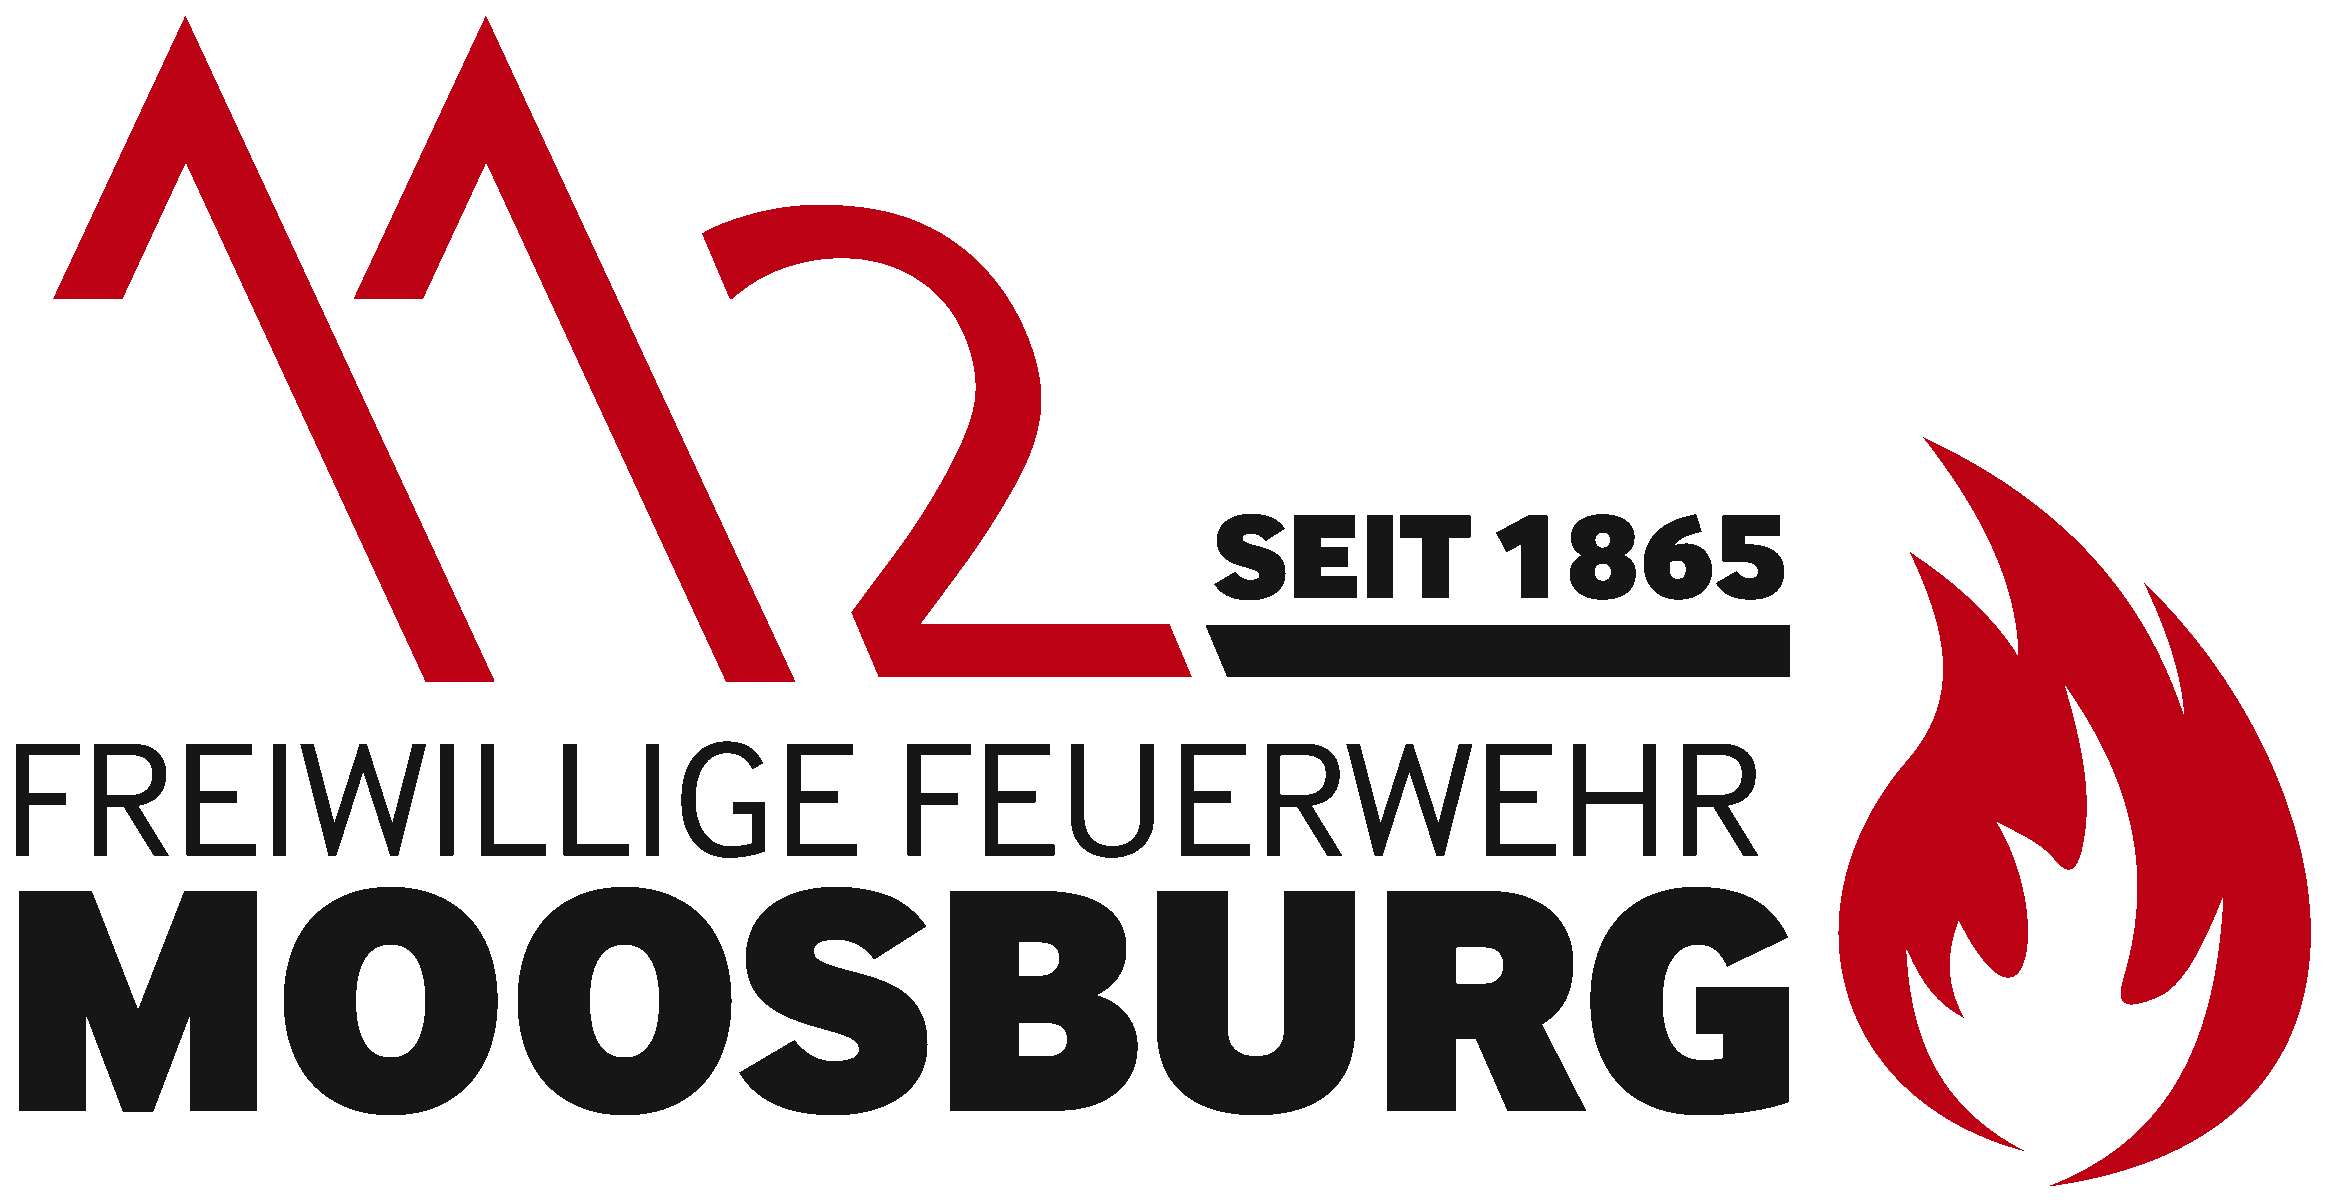 Freiwillige Feuerwehr Moosburg a.d. Isar e.V.